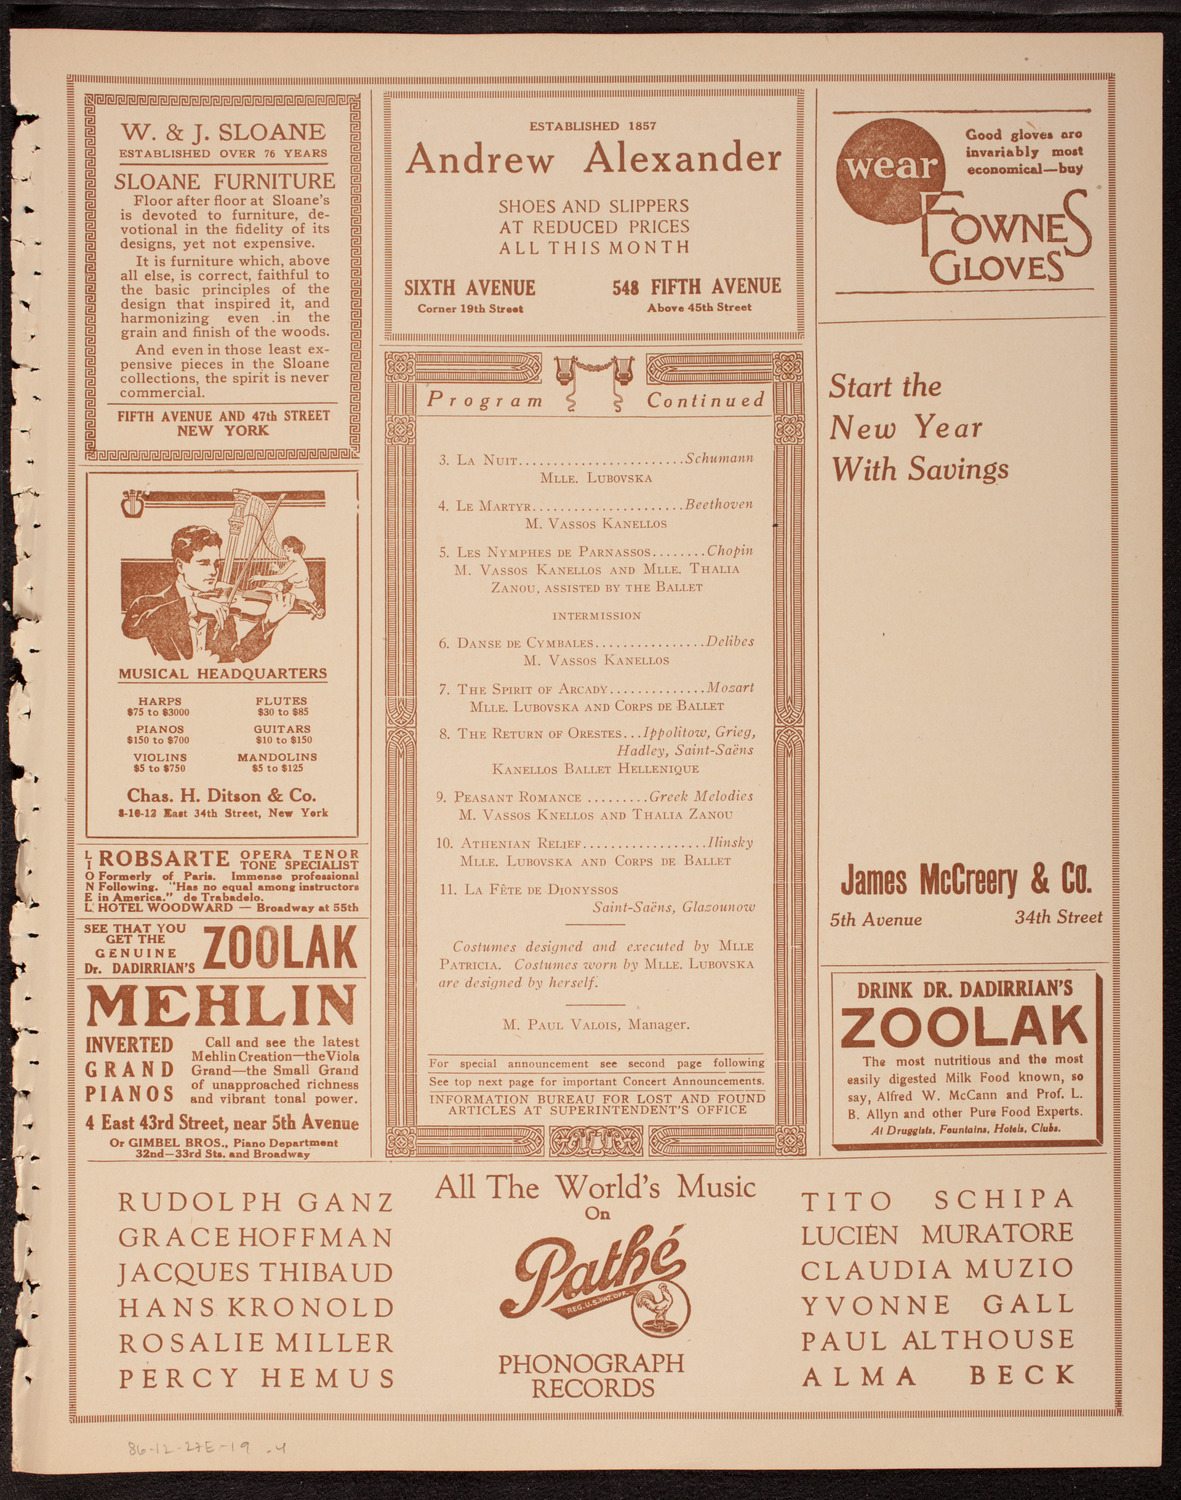 Kanellos Ballet Hellenique, December 27, 1919, program page 7